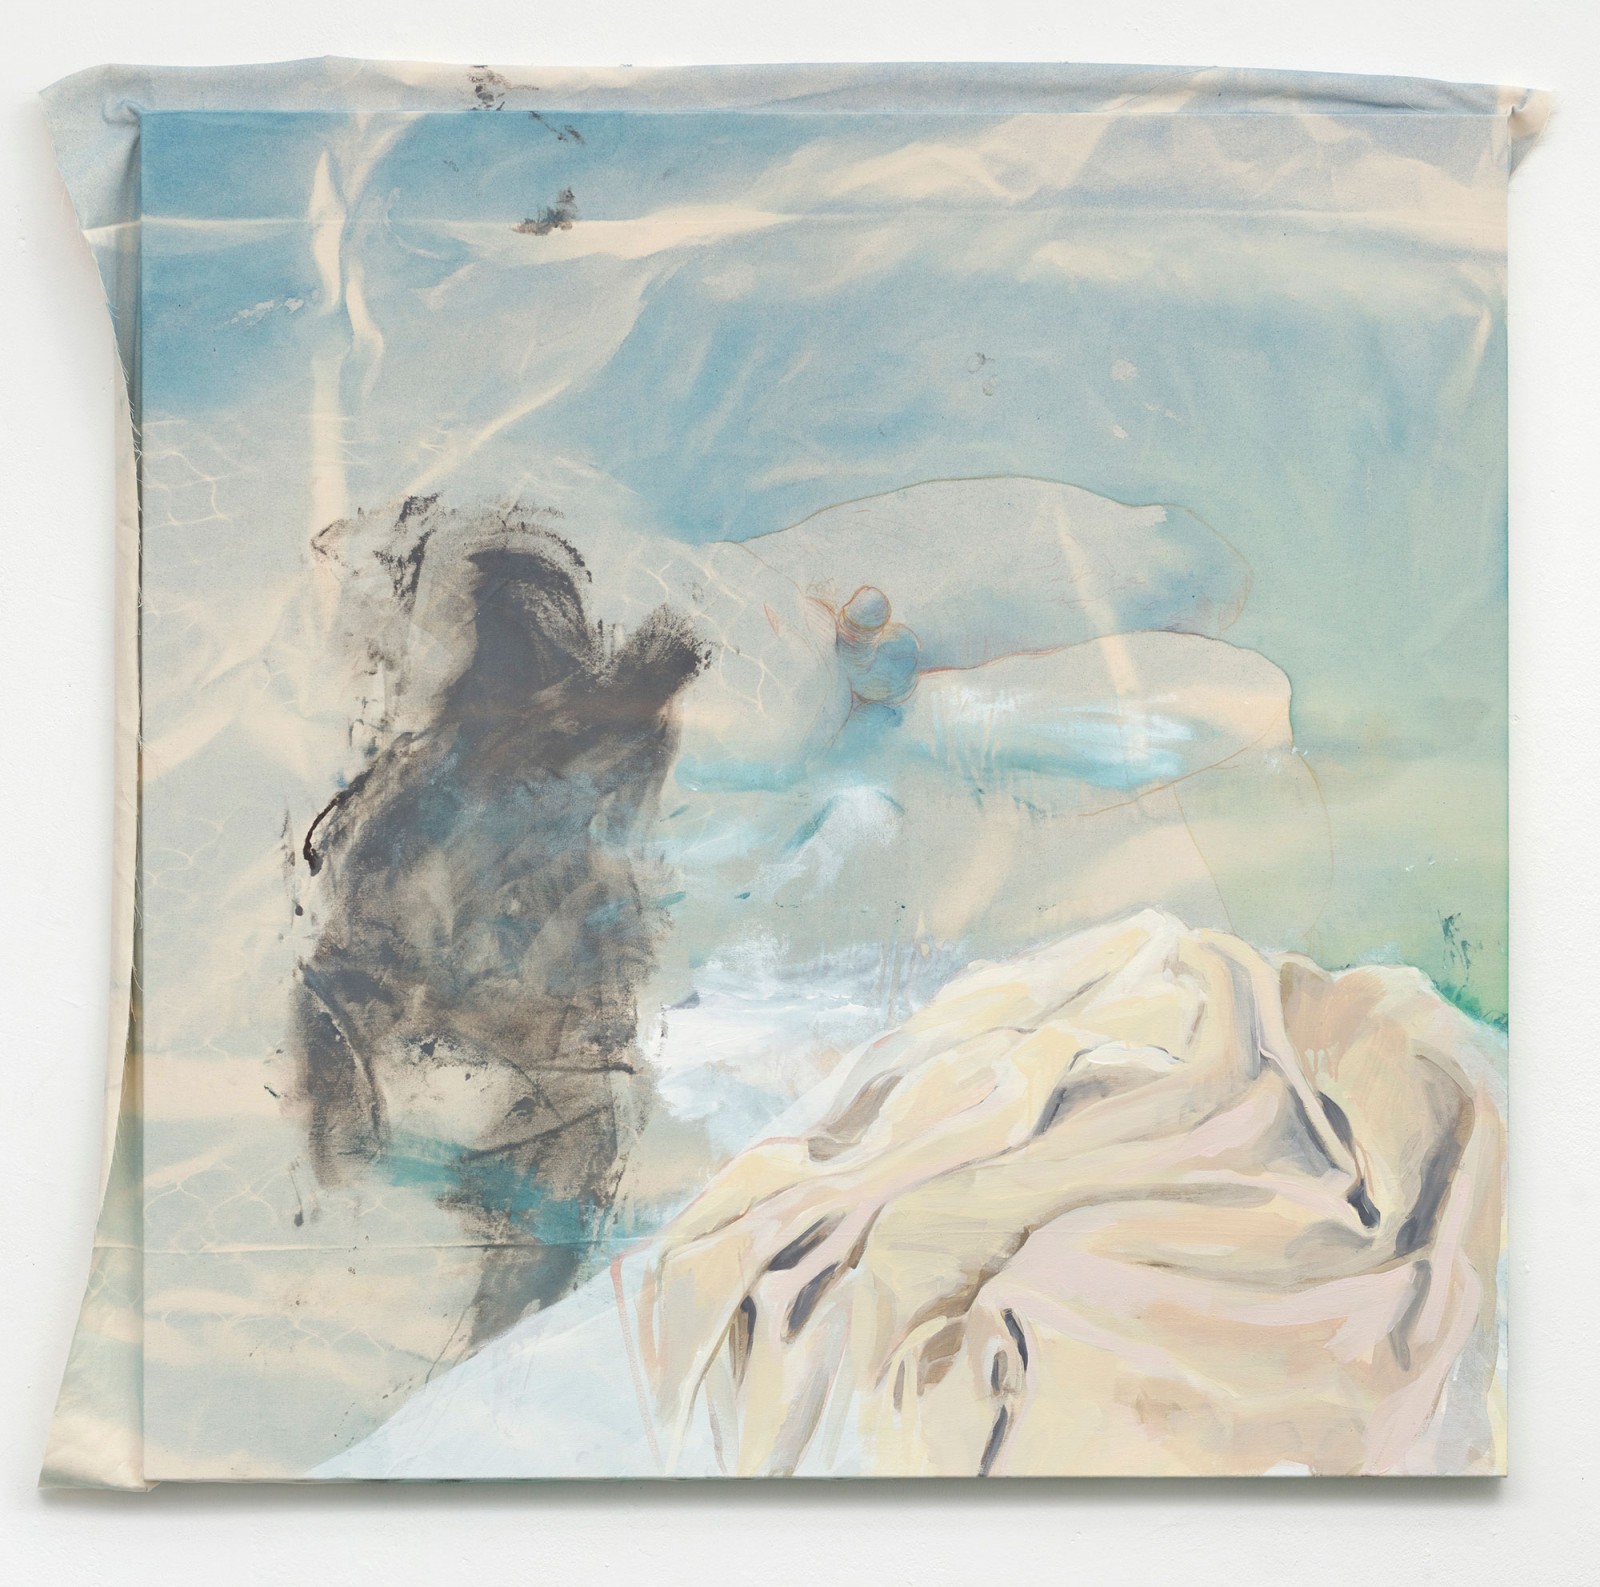 Kim Nekarda: untitled, 2020, vinyl color, ink & body print on cotton, 134 x 143 x 6 cm